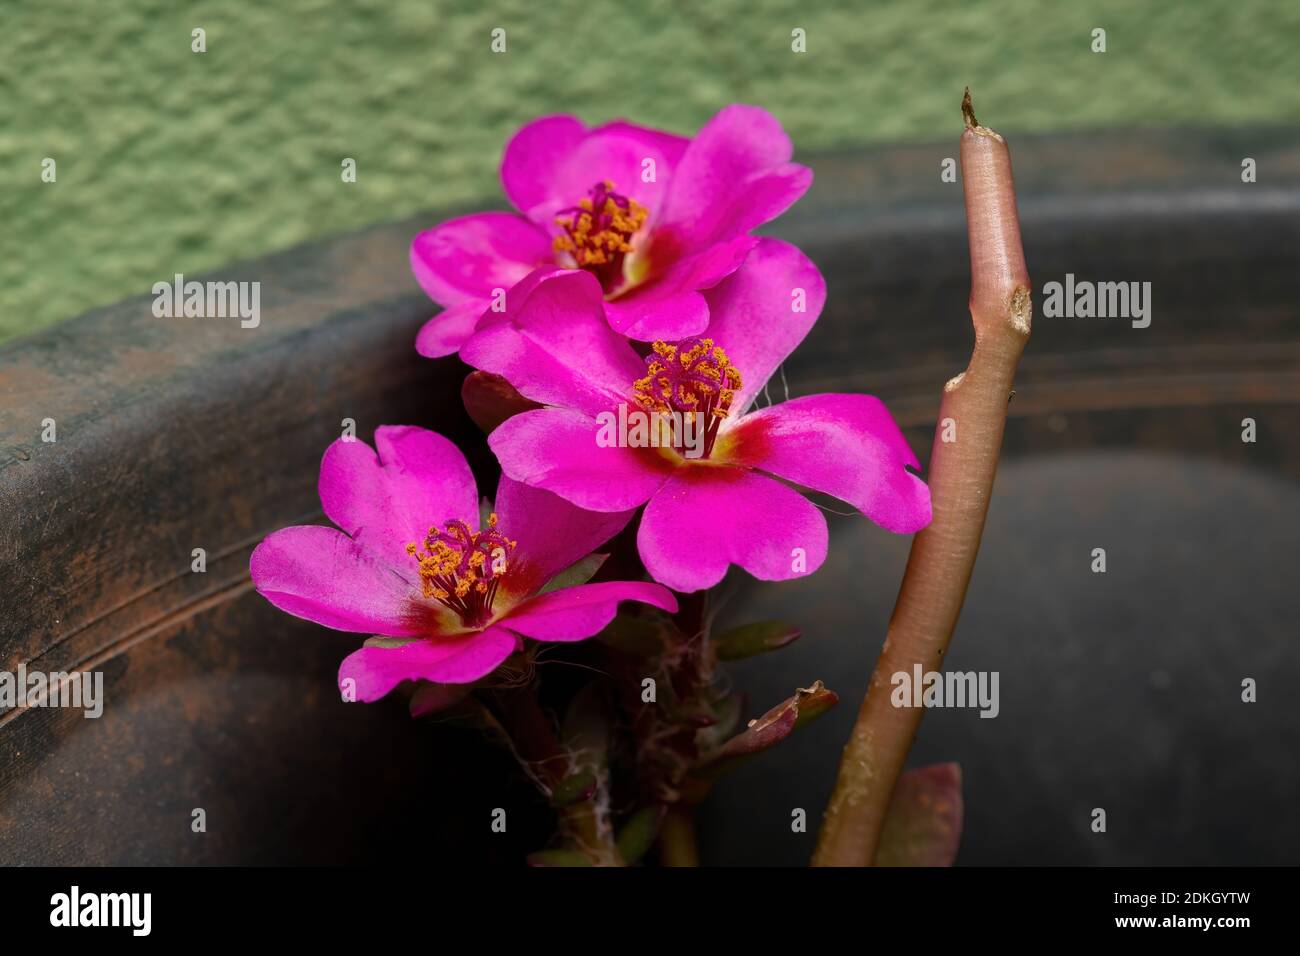 Paraguayan Purslane Flower of the species Portulaca amilis Stock Photo ...